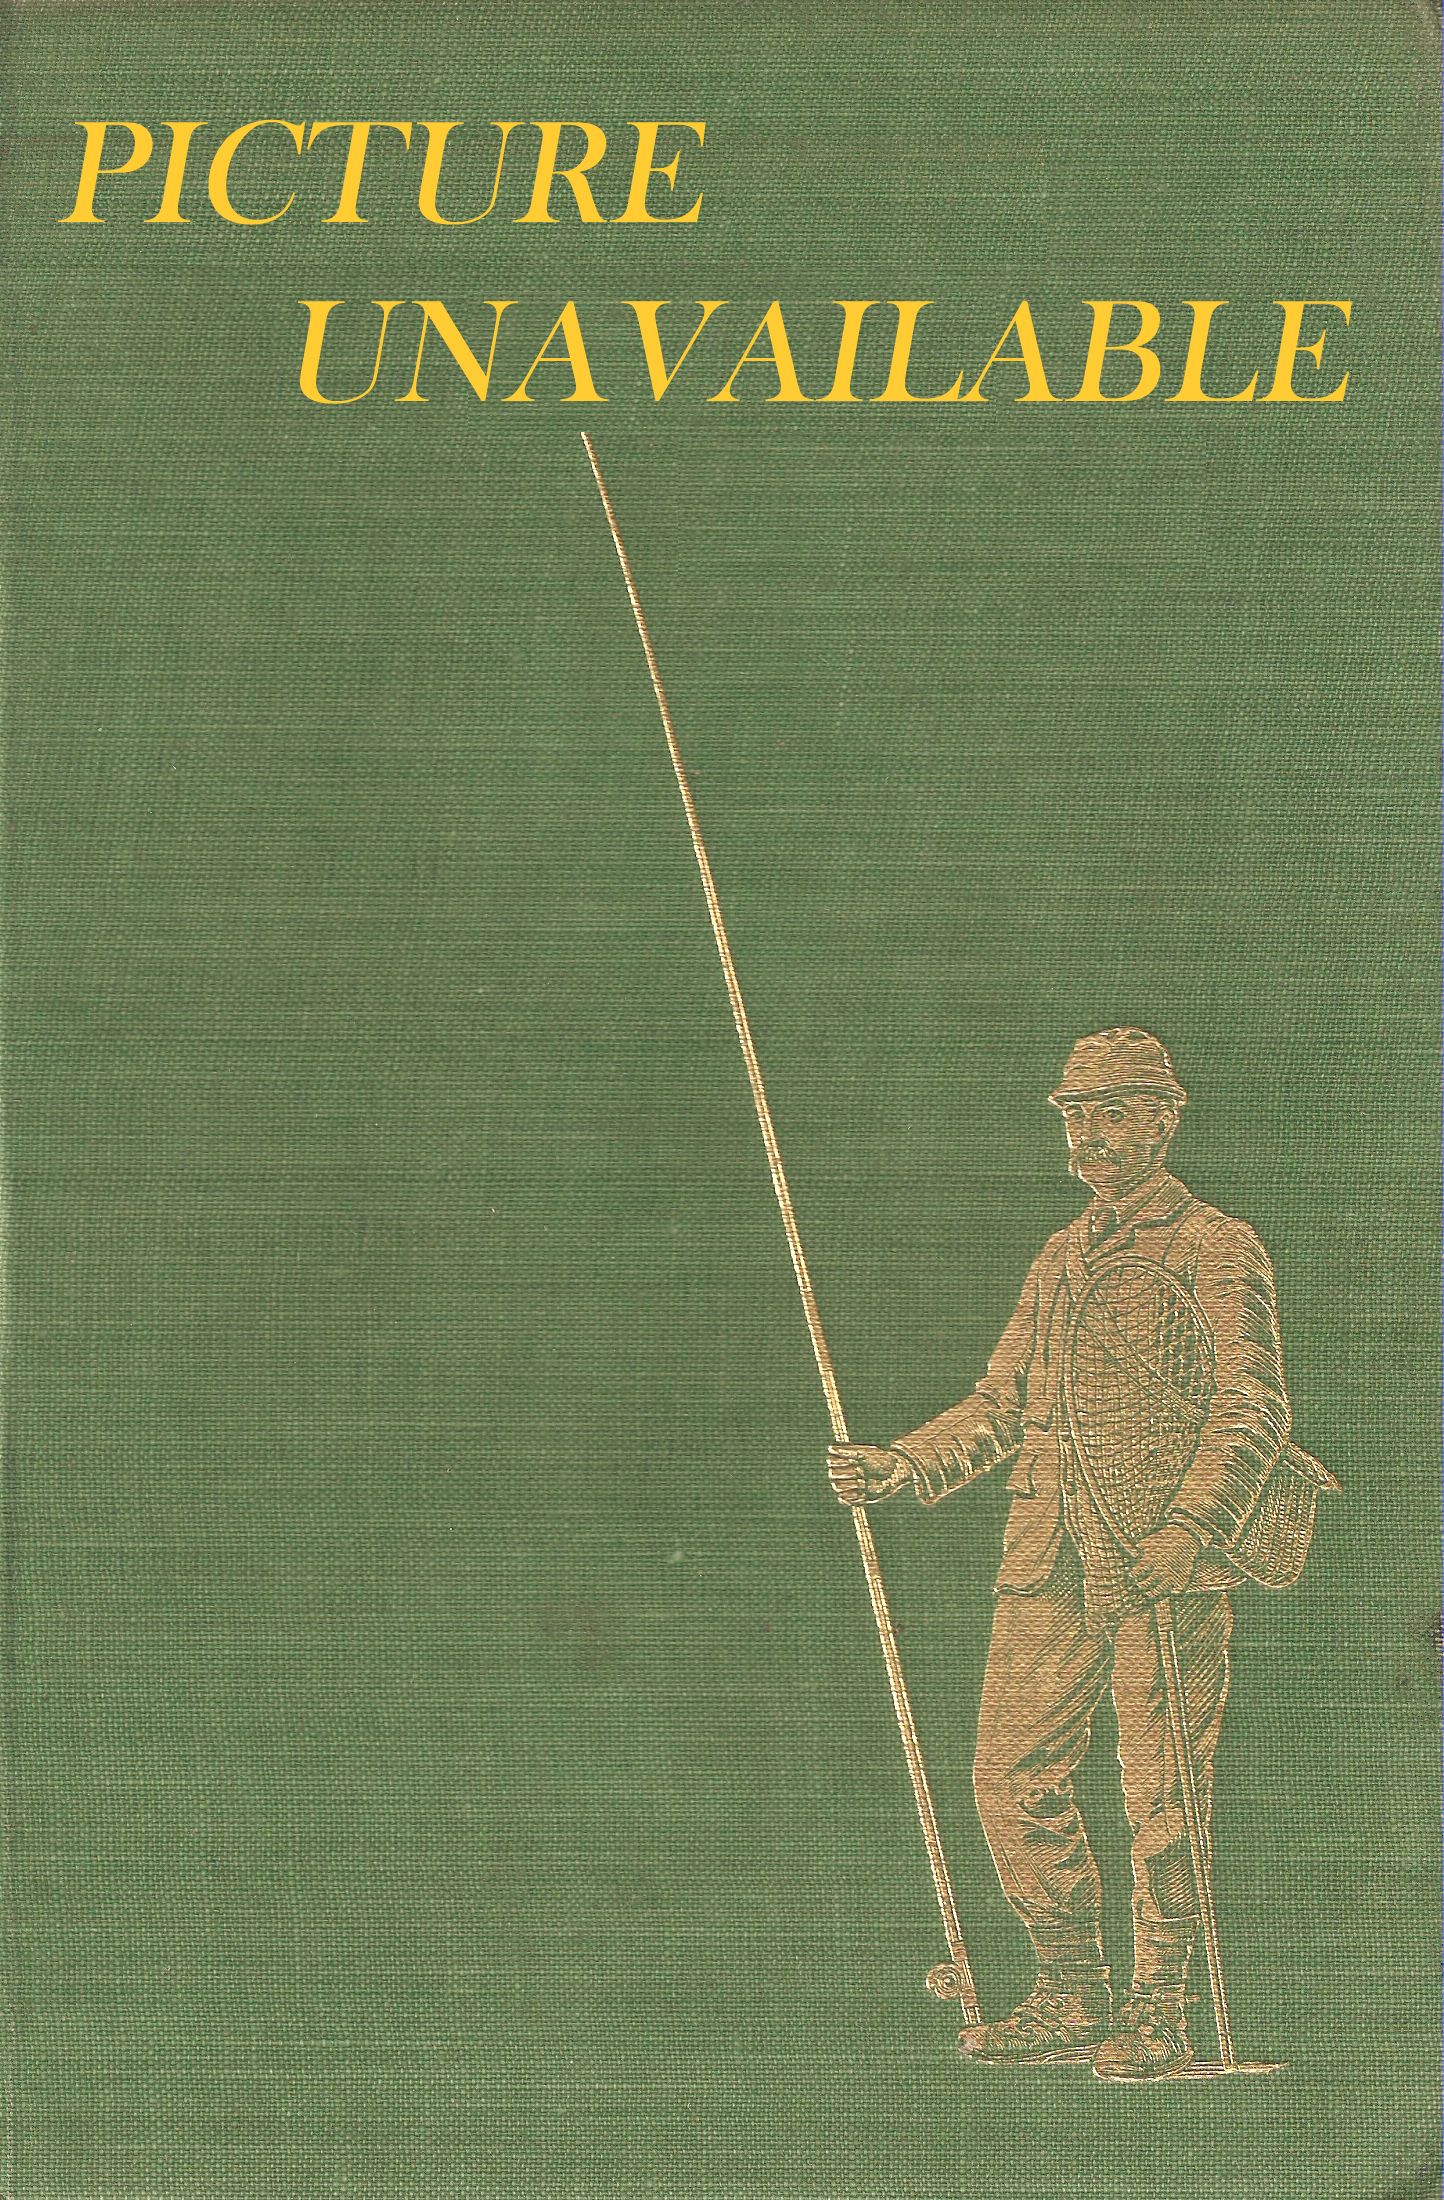 CREEL: A FISHING MAGAZINE. Volume 1, number 12. June 1964.